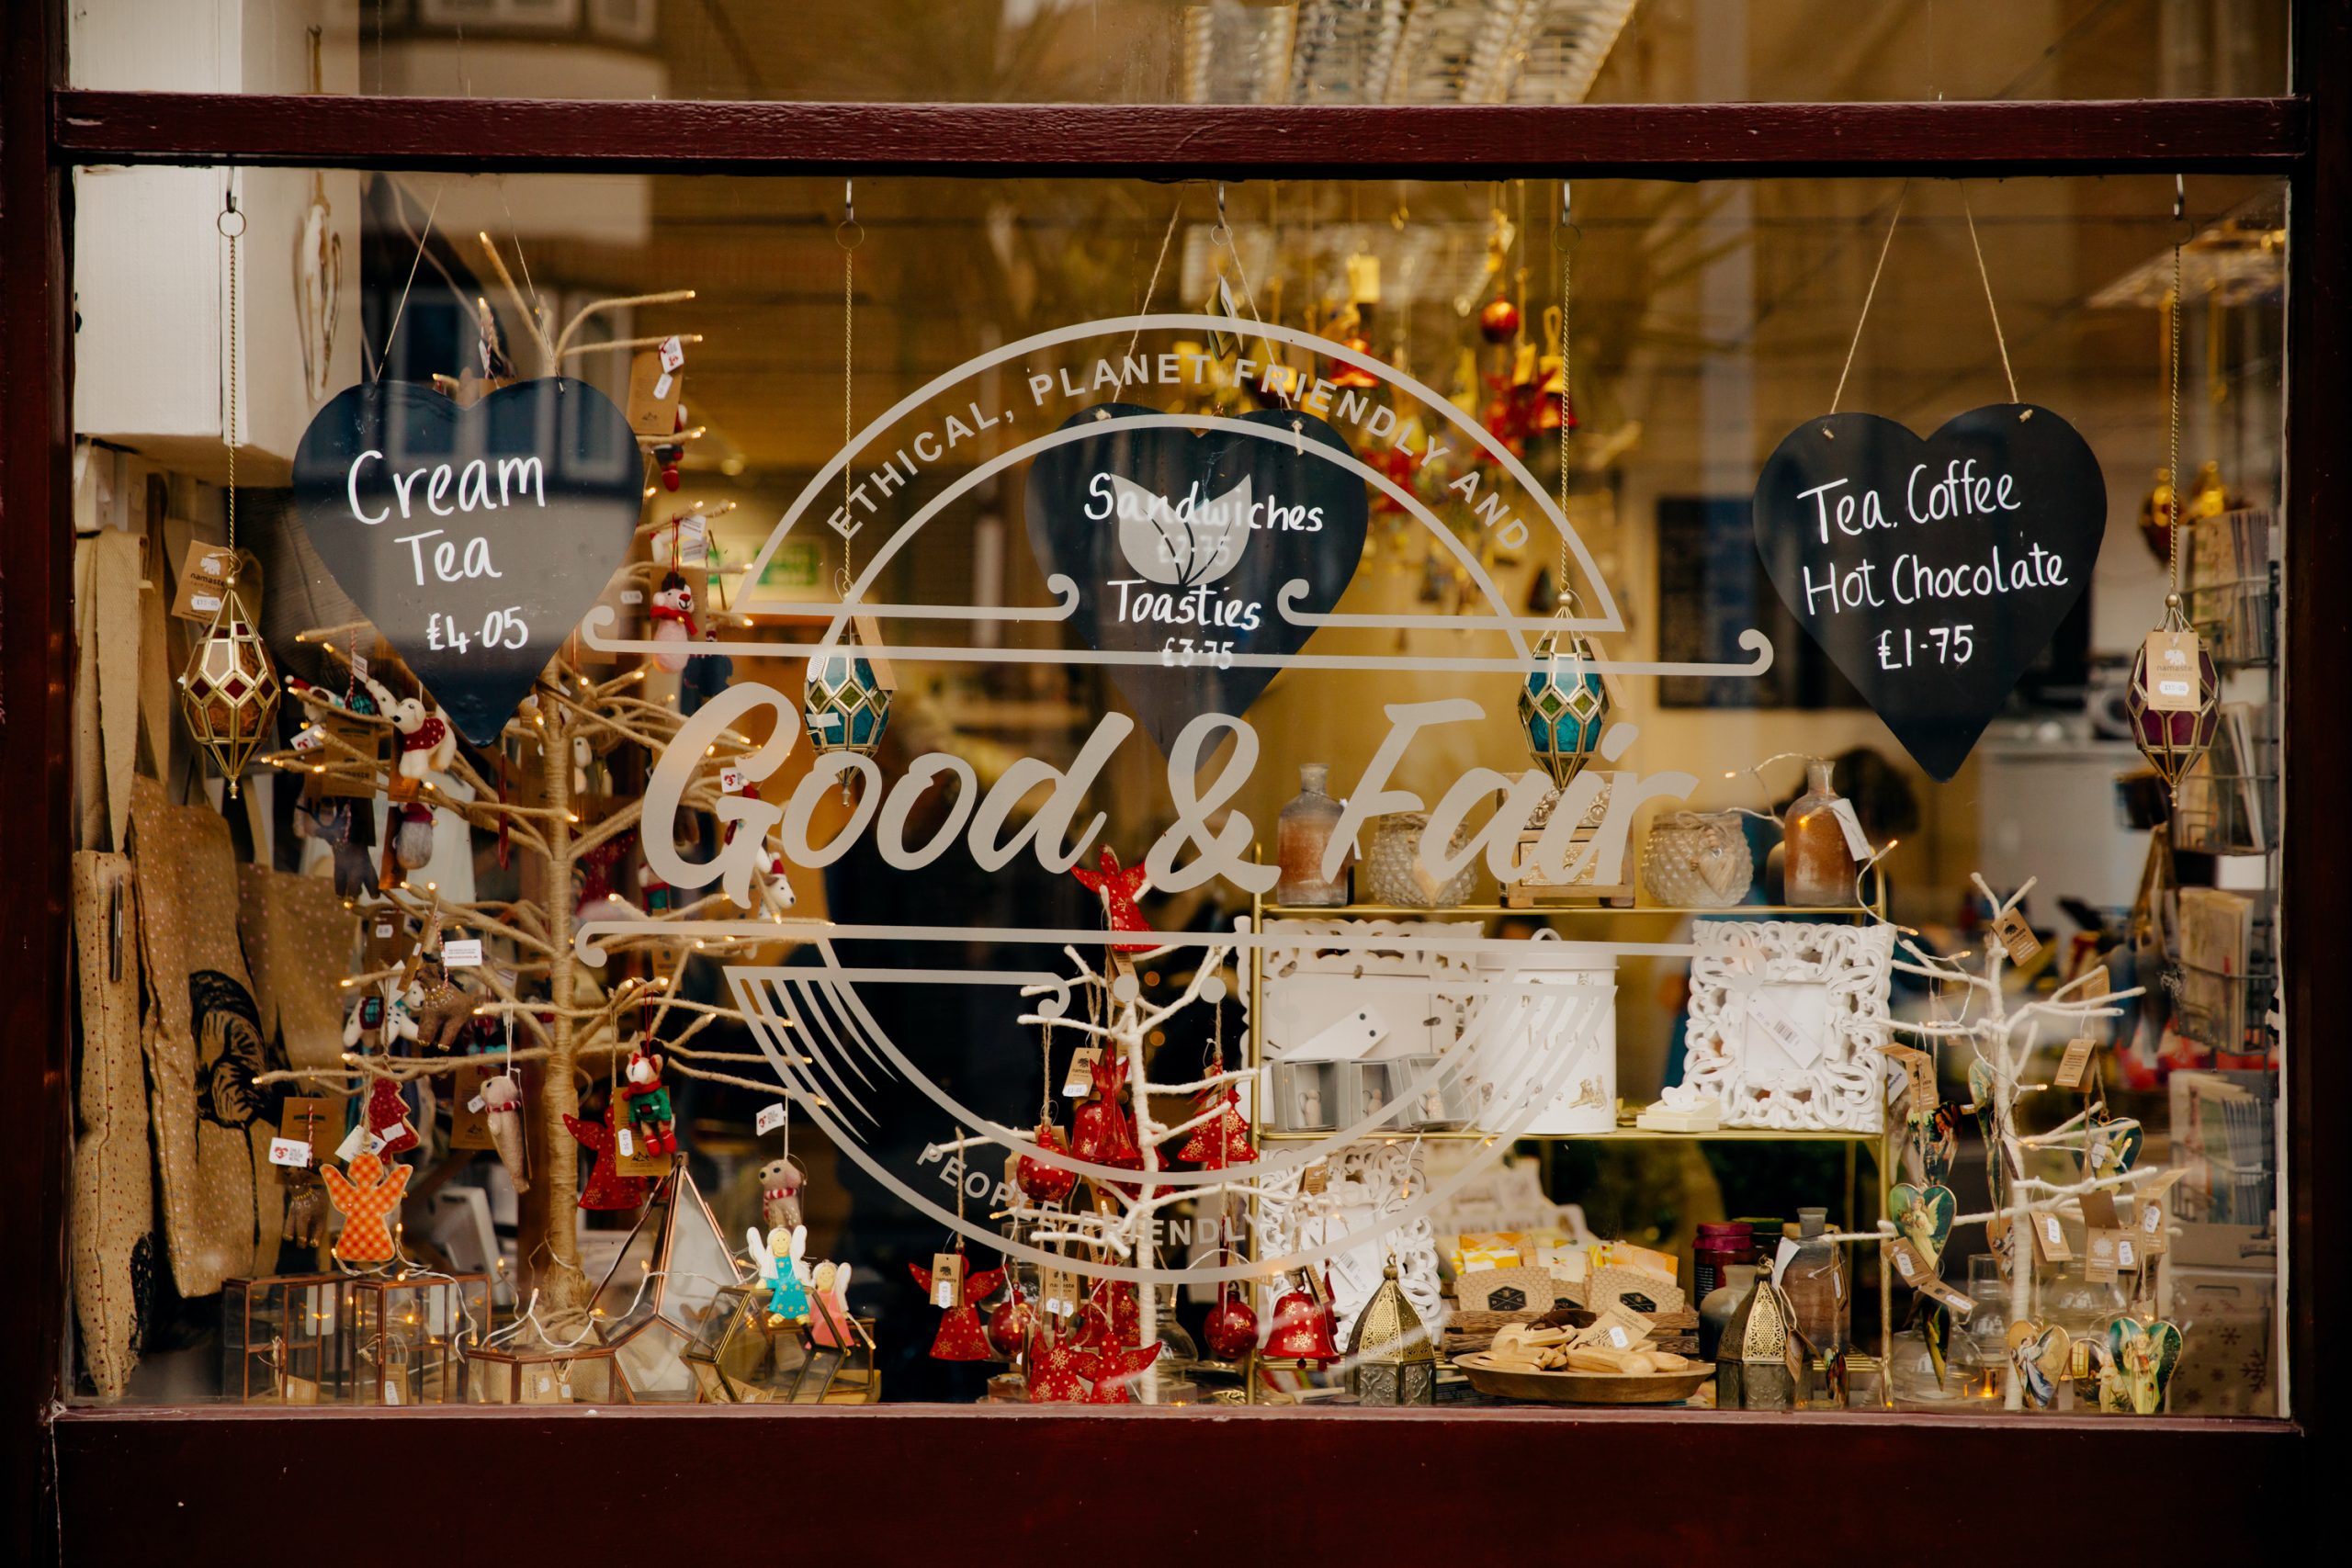 Good and Fair Shop, Bognor Regis by Peter Flude